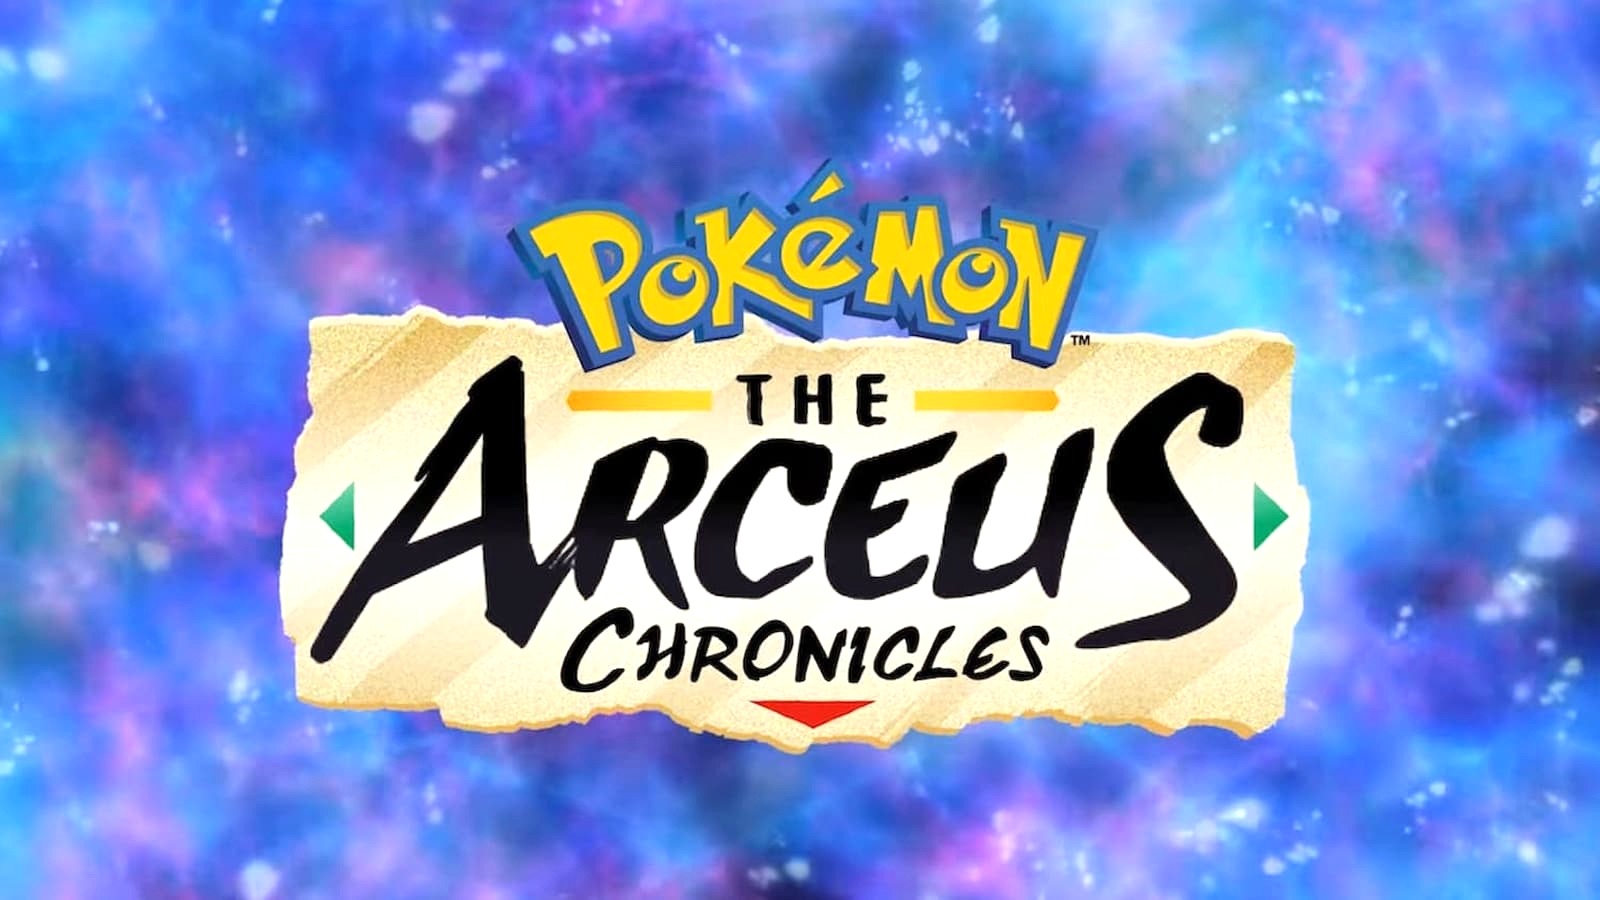 Pokémon: Arceus Chronicles is a new Pokémon special coming to